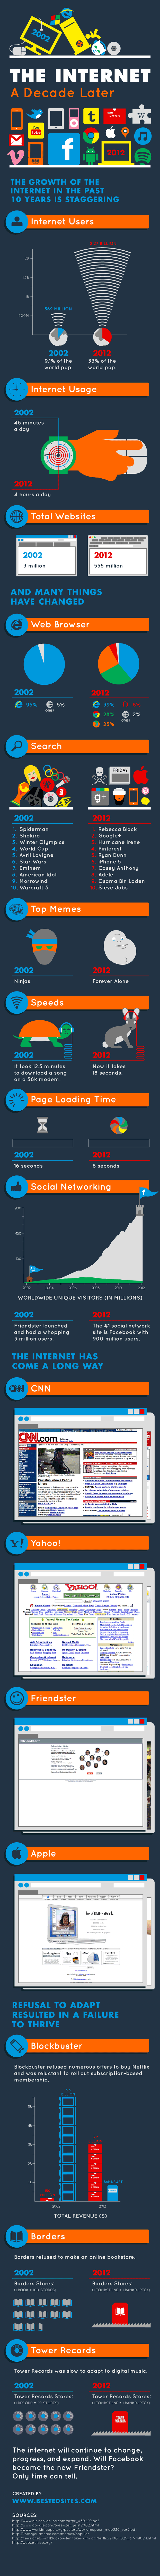 10 years internet